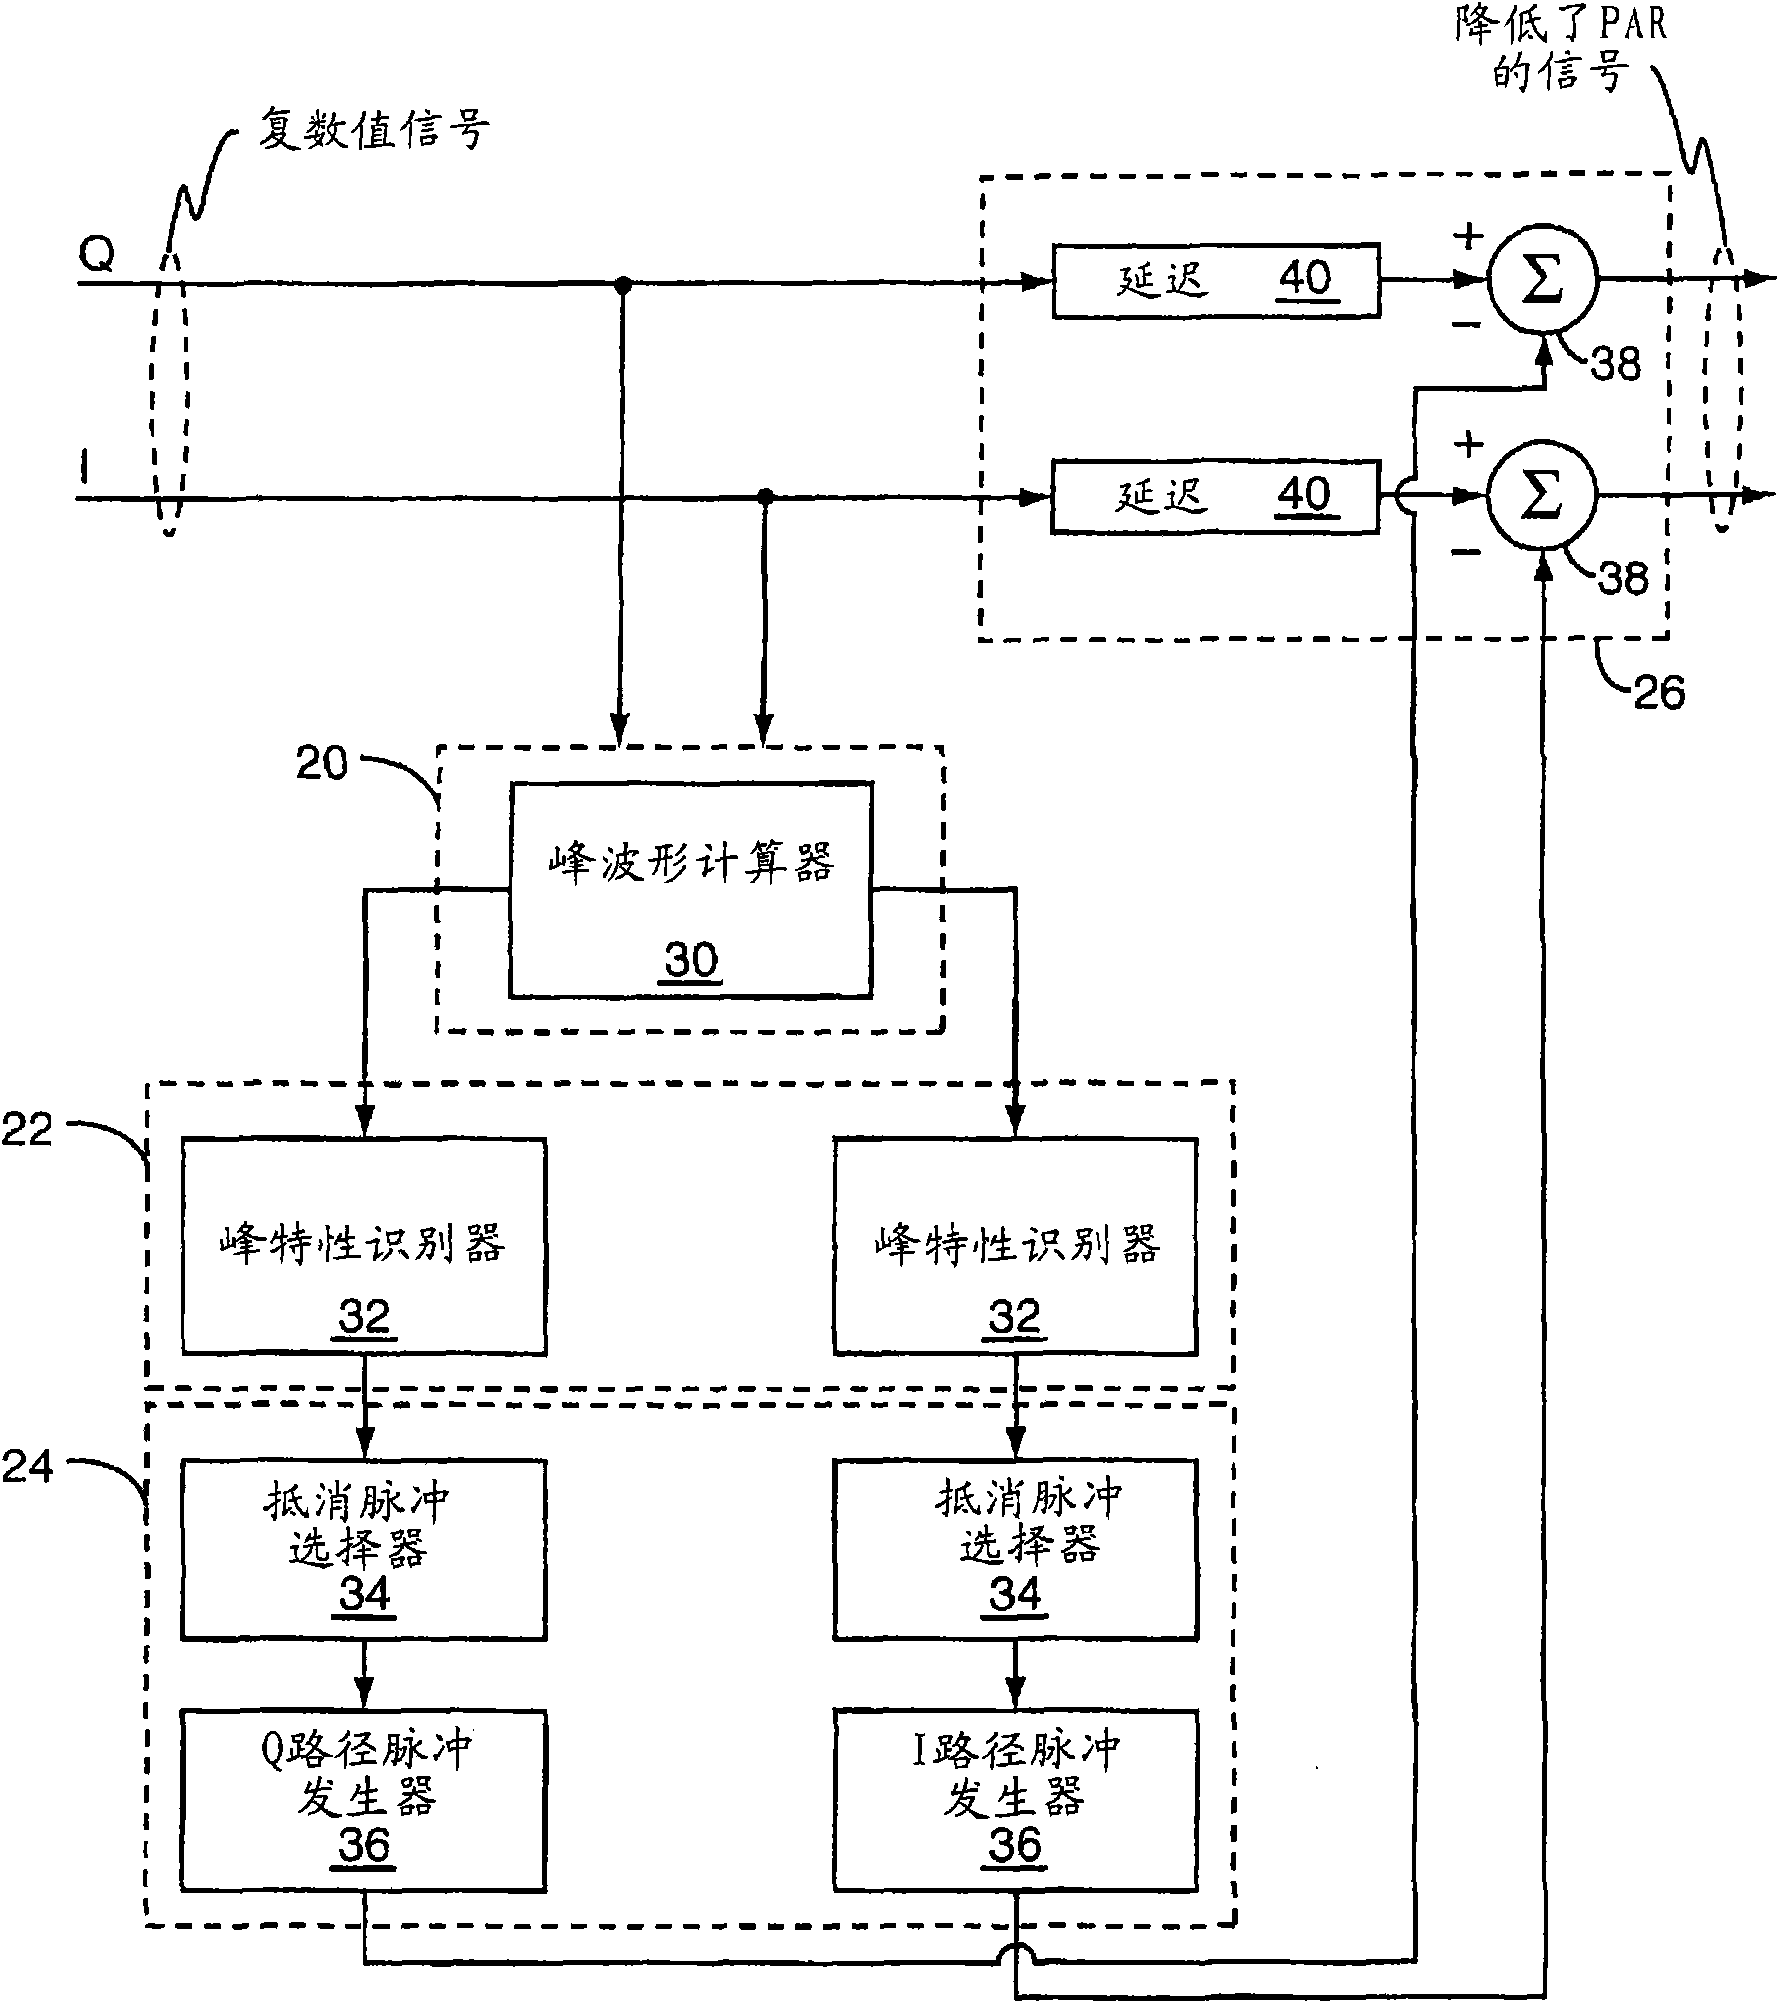 Method and apparatus for signal peak-to-average ratio reduction